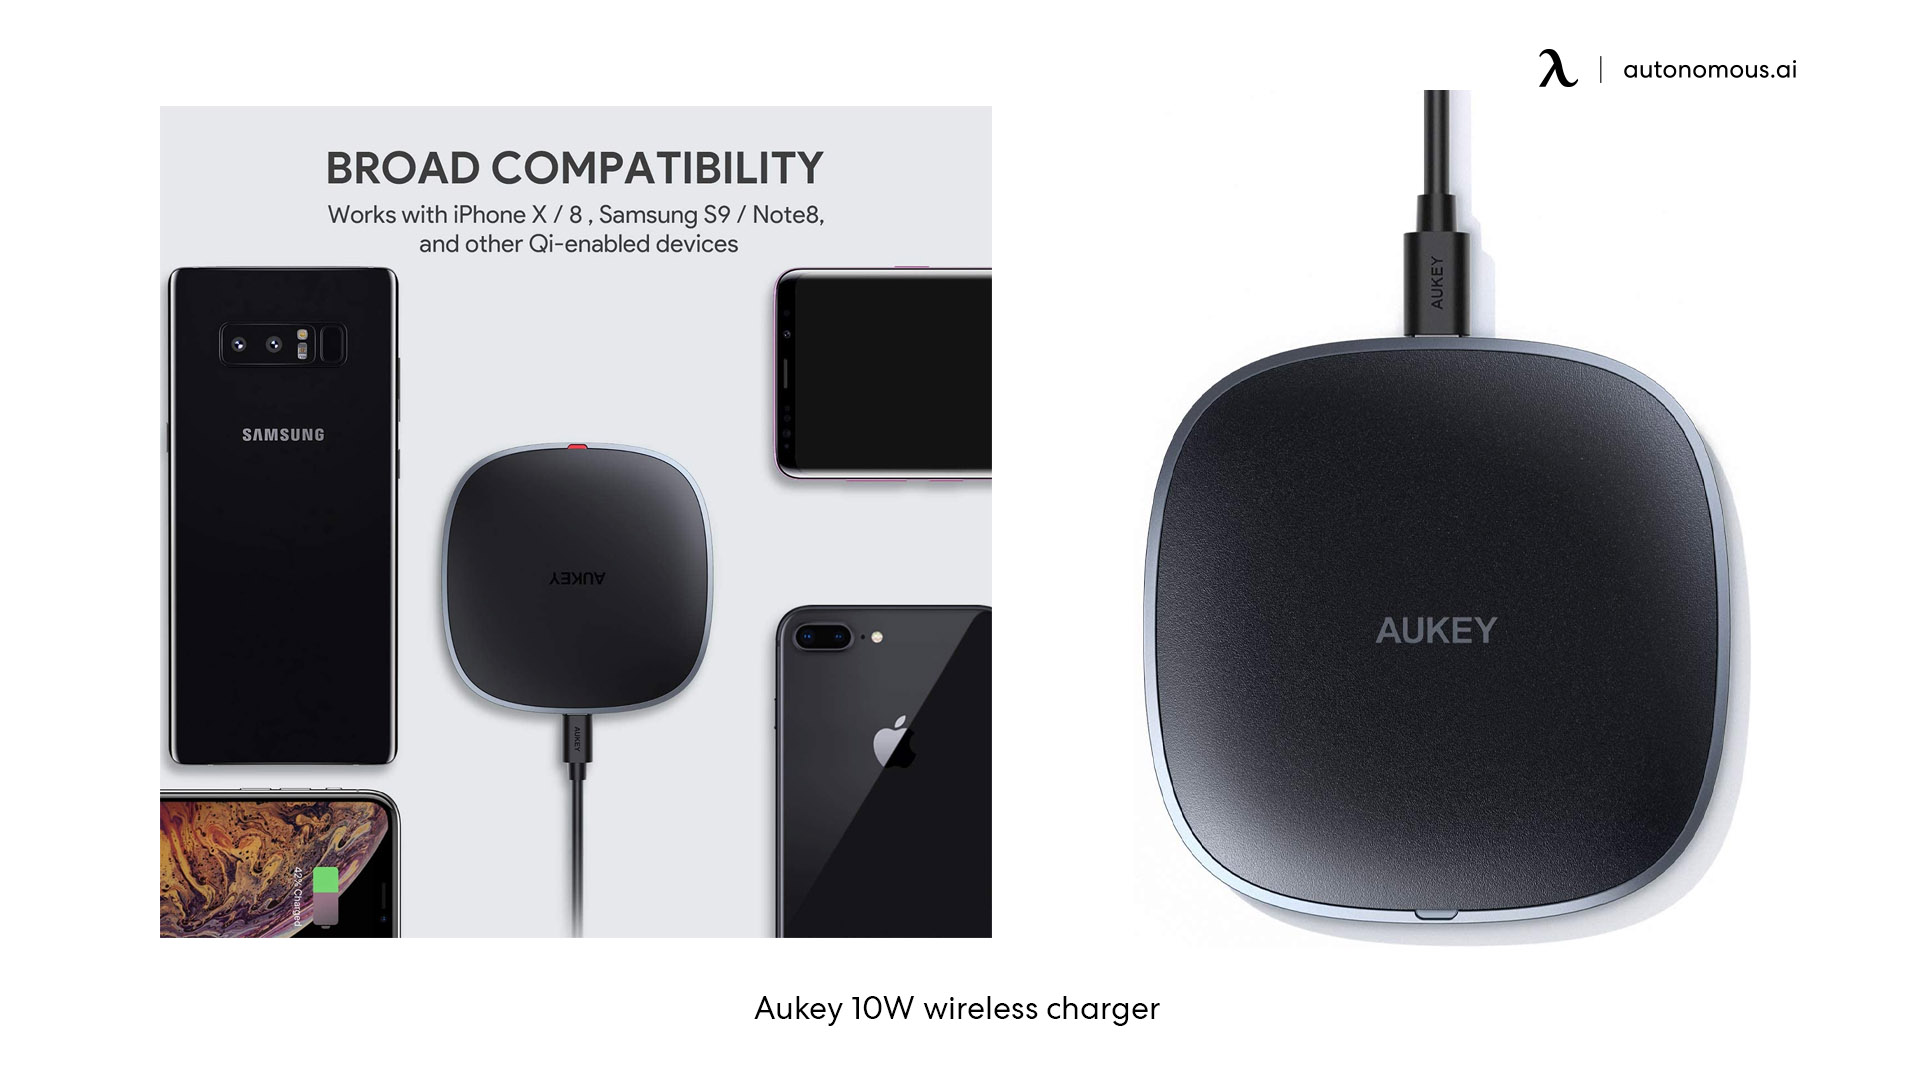 Aukey 10W wireless charger